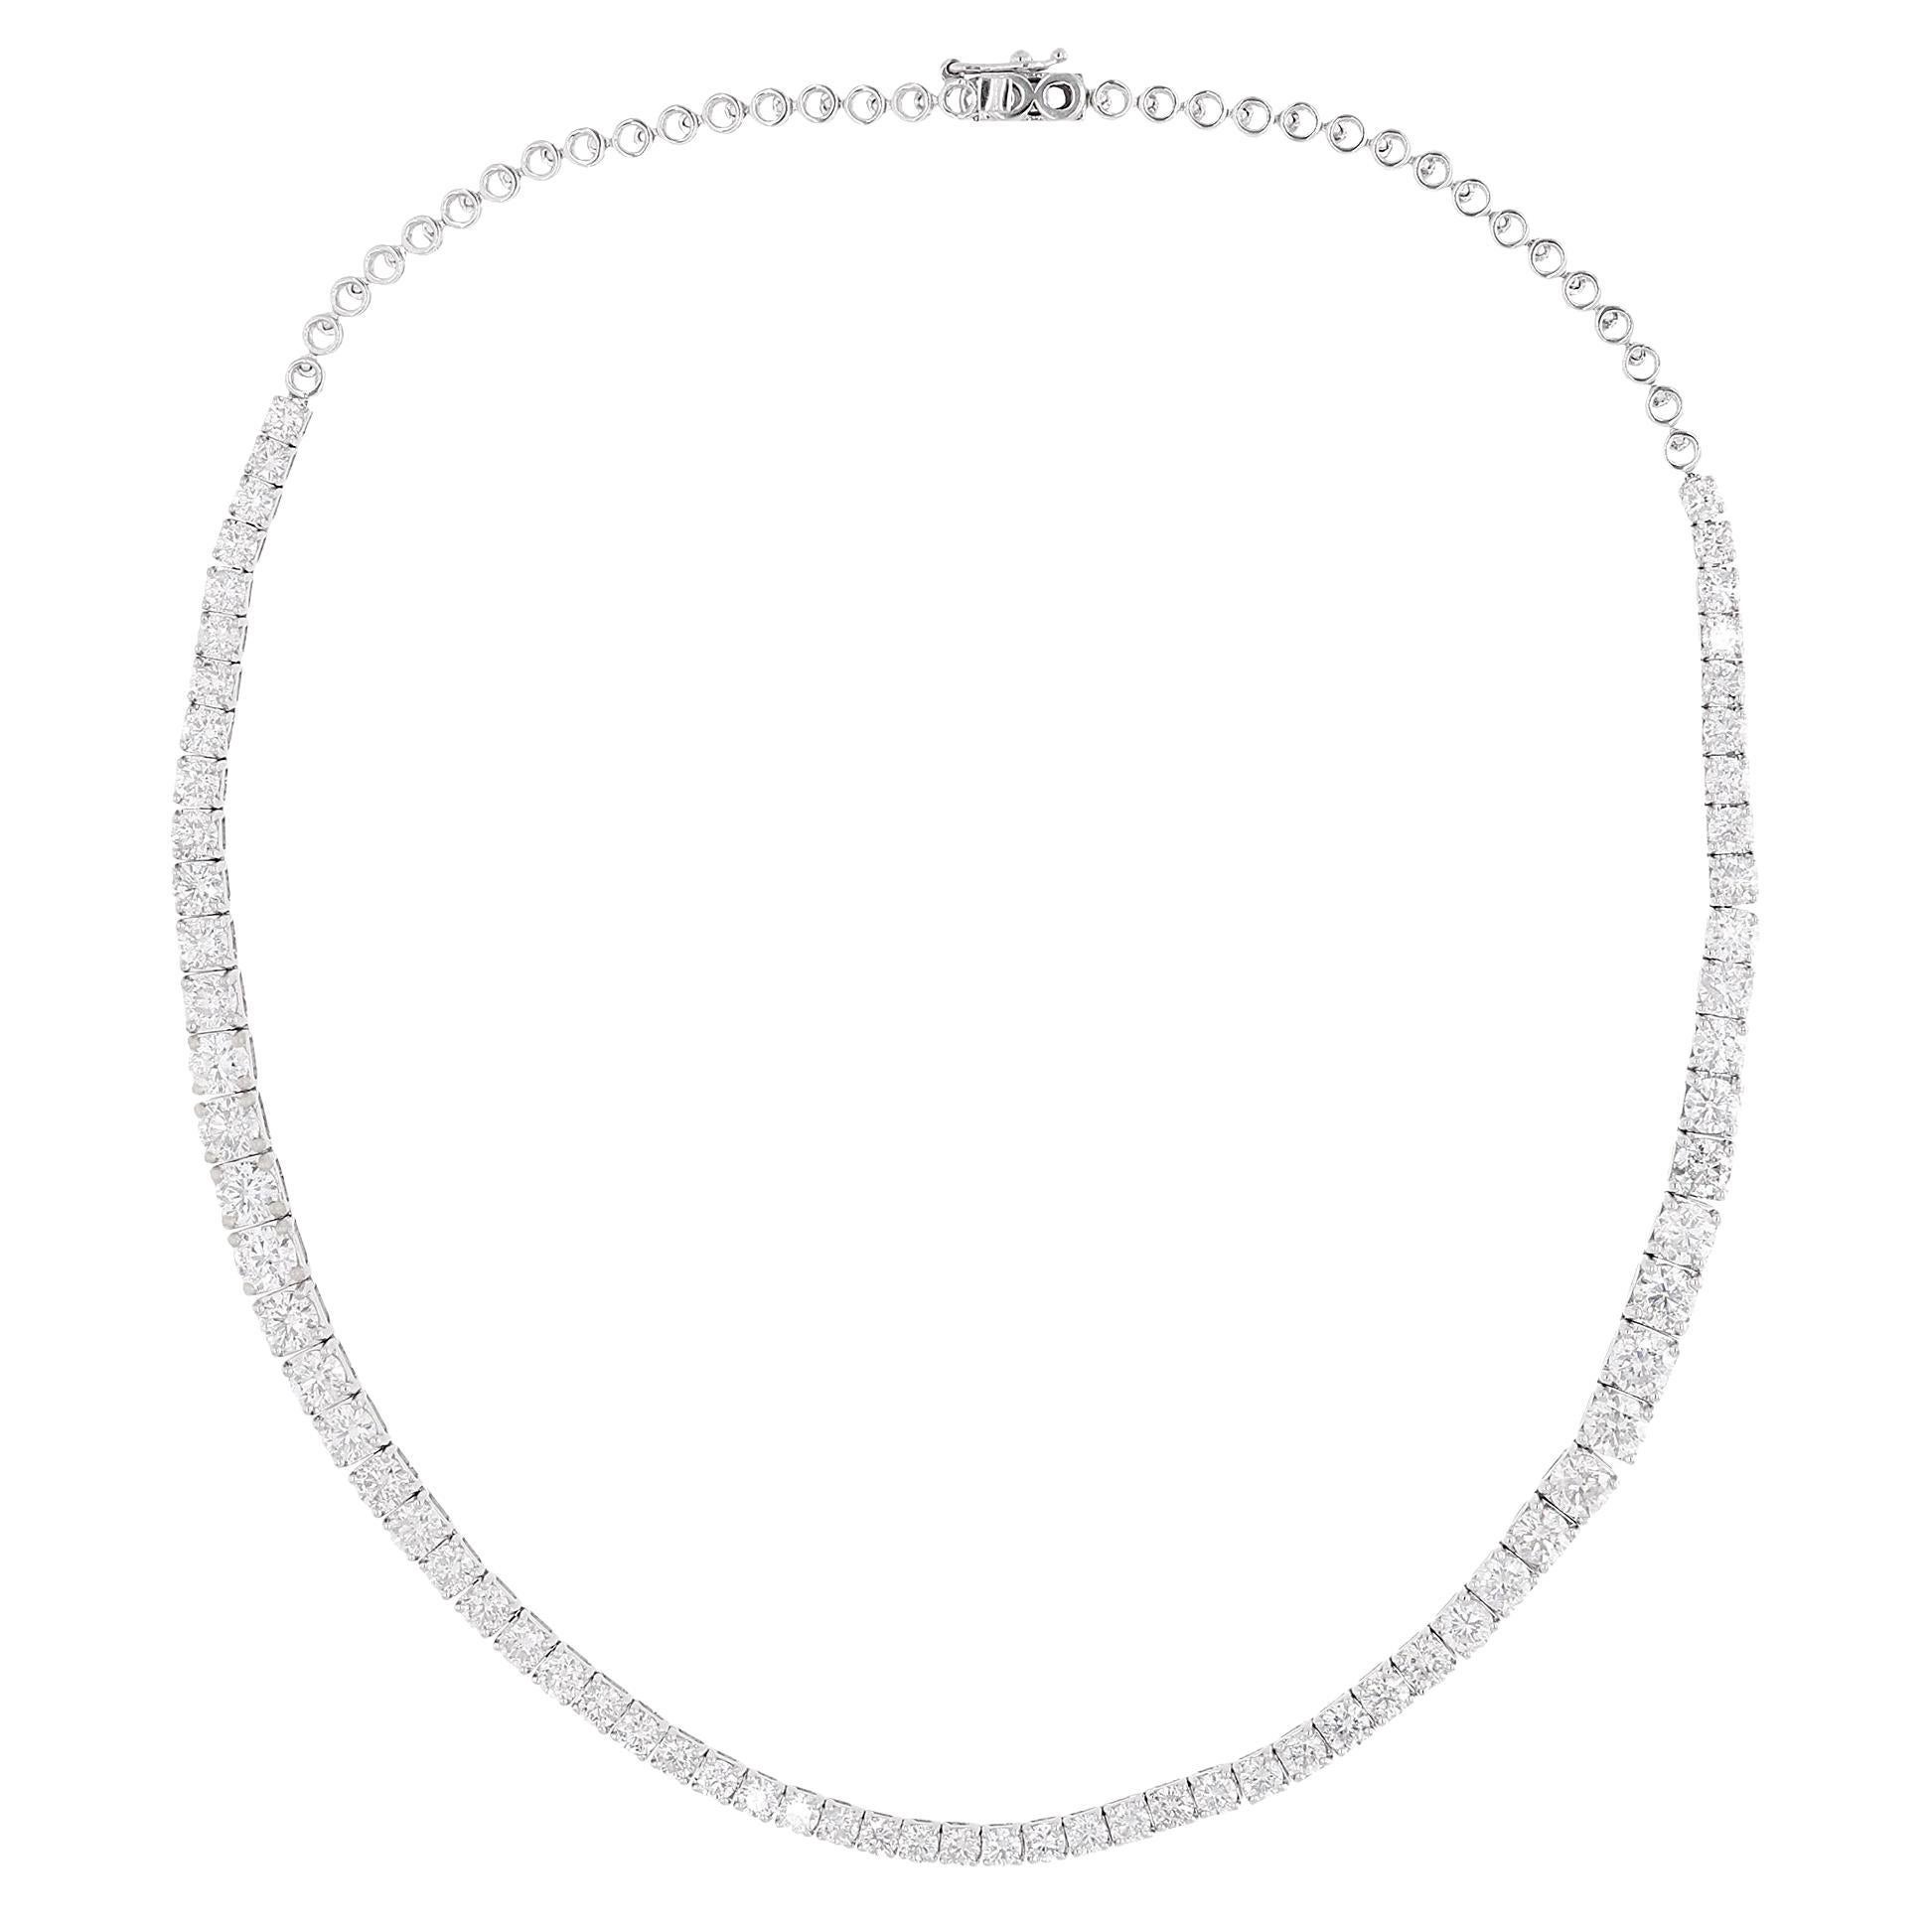 15.6 Carat SI Clarity HI Color Round Diamond Choker Necklace 18 Karat White Gold For Sale